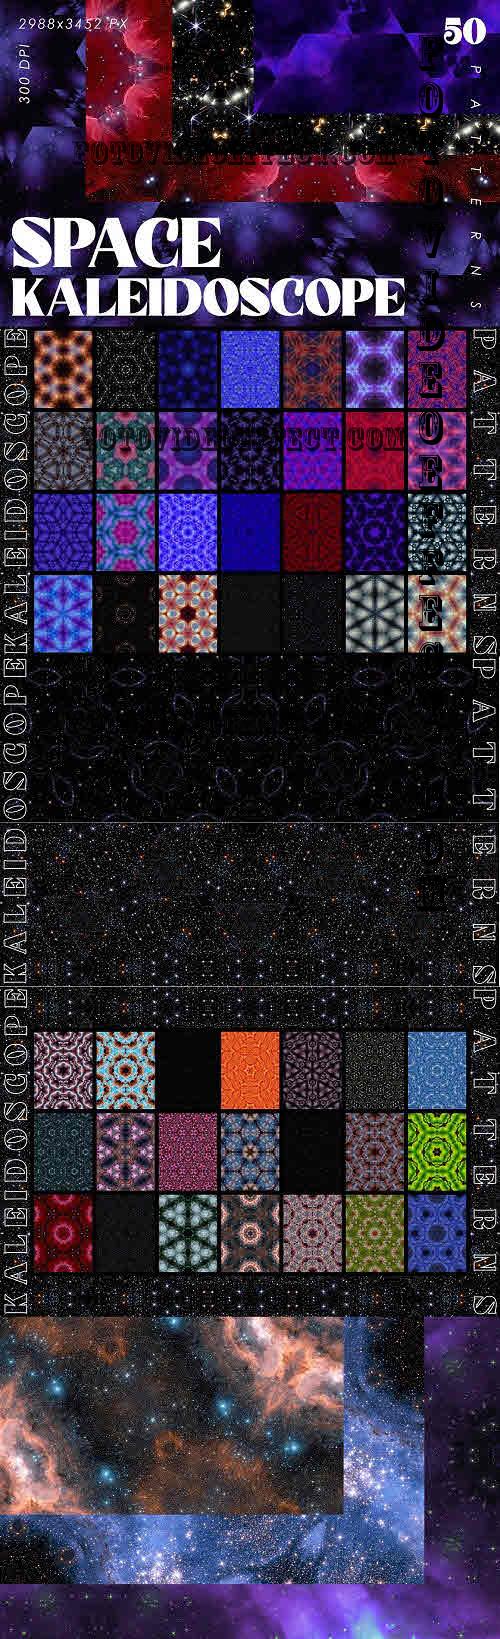 Space Kaleidoscope Patterns - 7456792